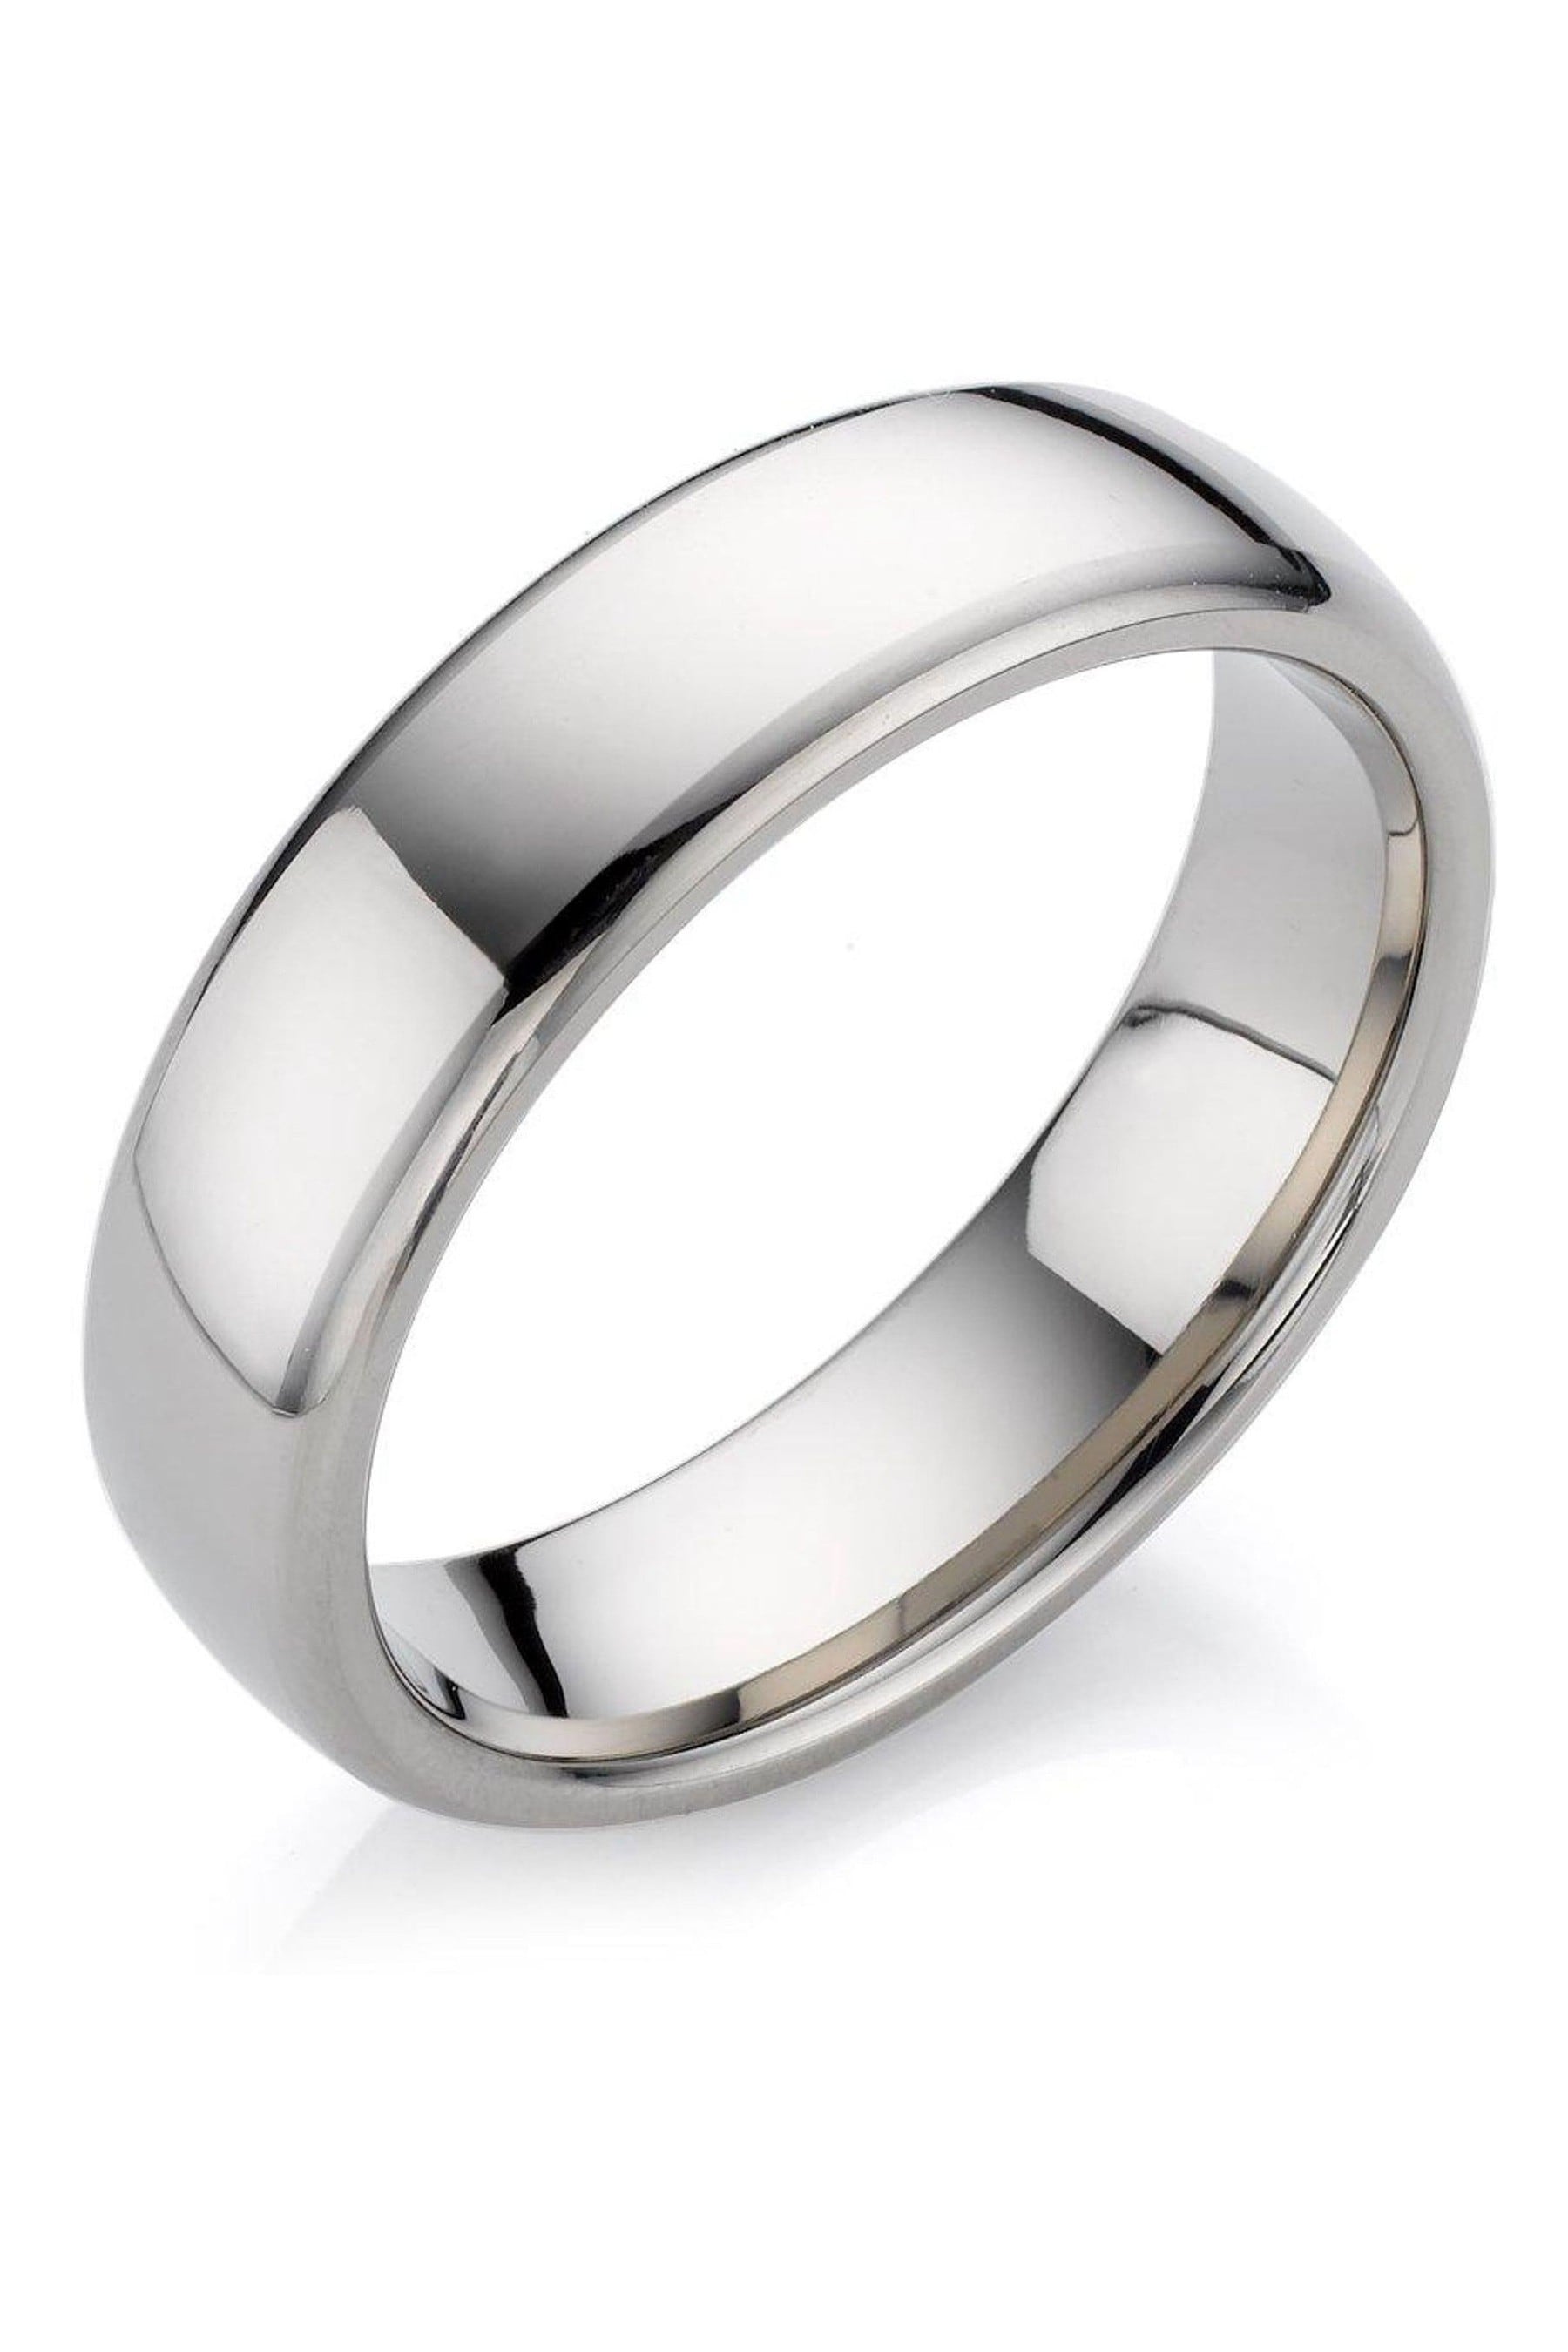 Buy Beaverbrooks Men's Titanium Ring from the Next UK online shop